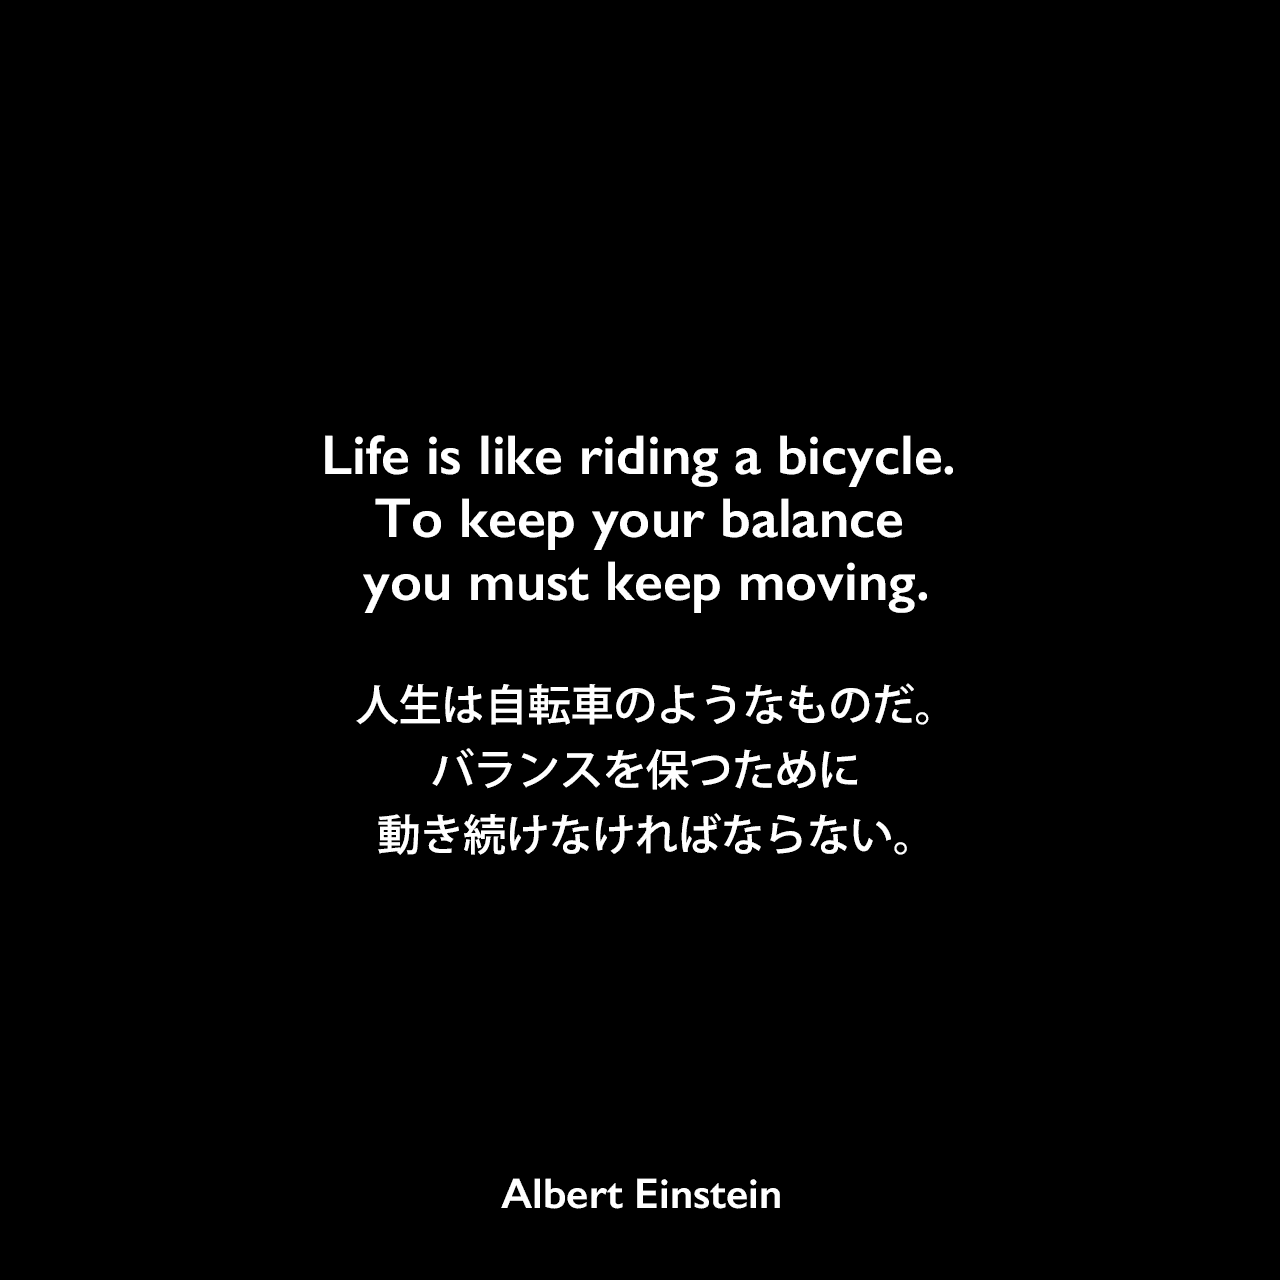 Life is like riding a bicycle. To keep your balance you must keep moving.人生は自転車のようなものだ。バランスを保つために動き続けなければならない。- 息子のエドゥアルト・アインシュタインに宛てた手紙（1930年2月5日）よりAlbert Einstein